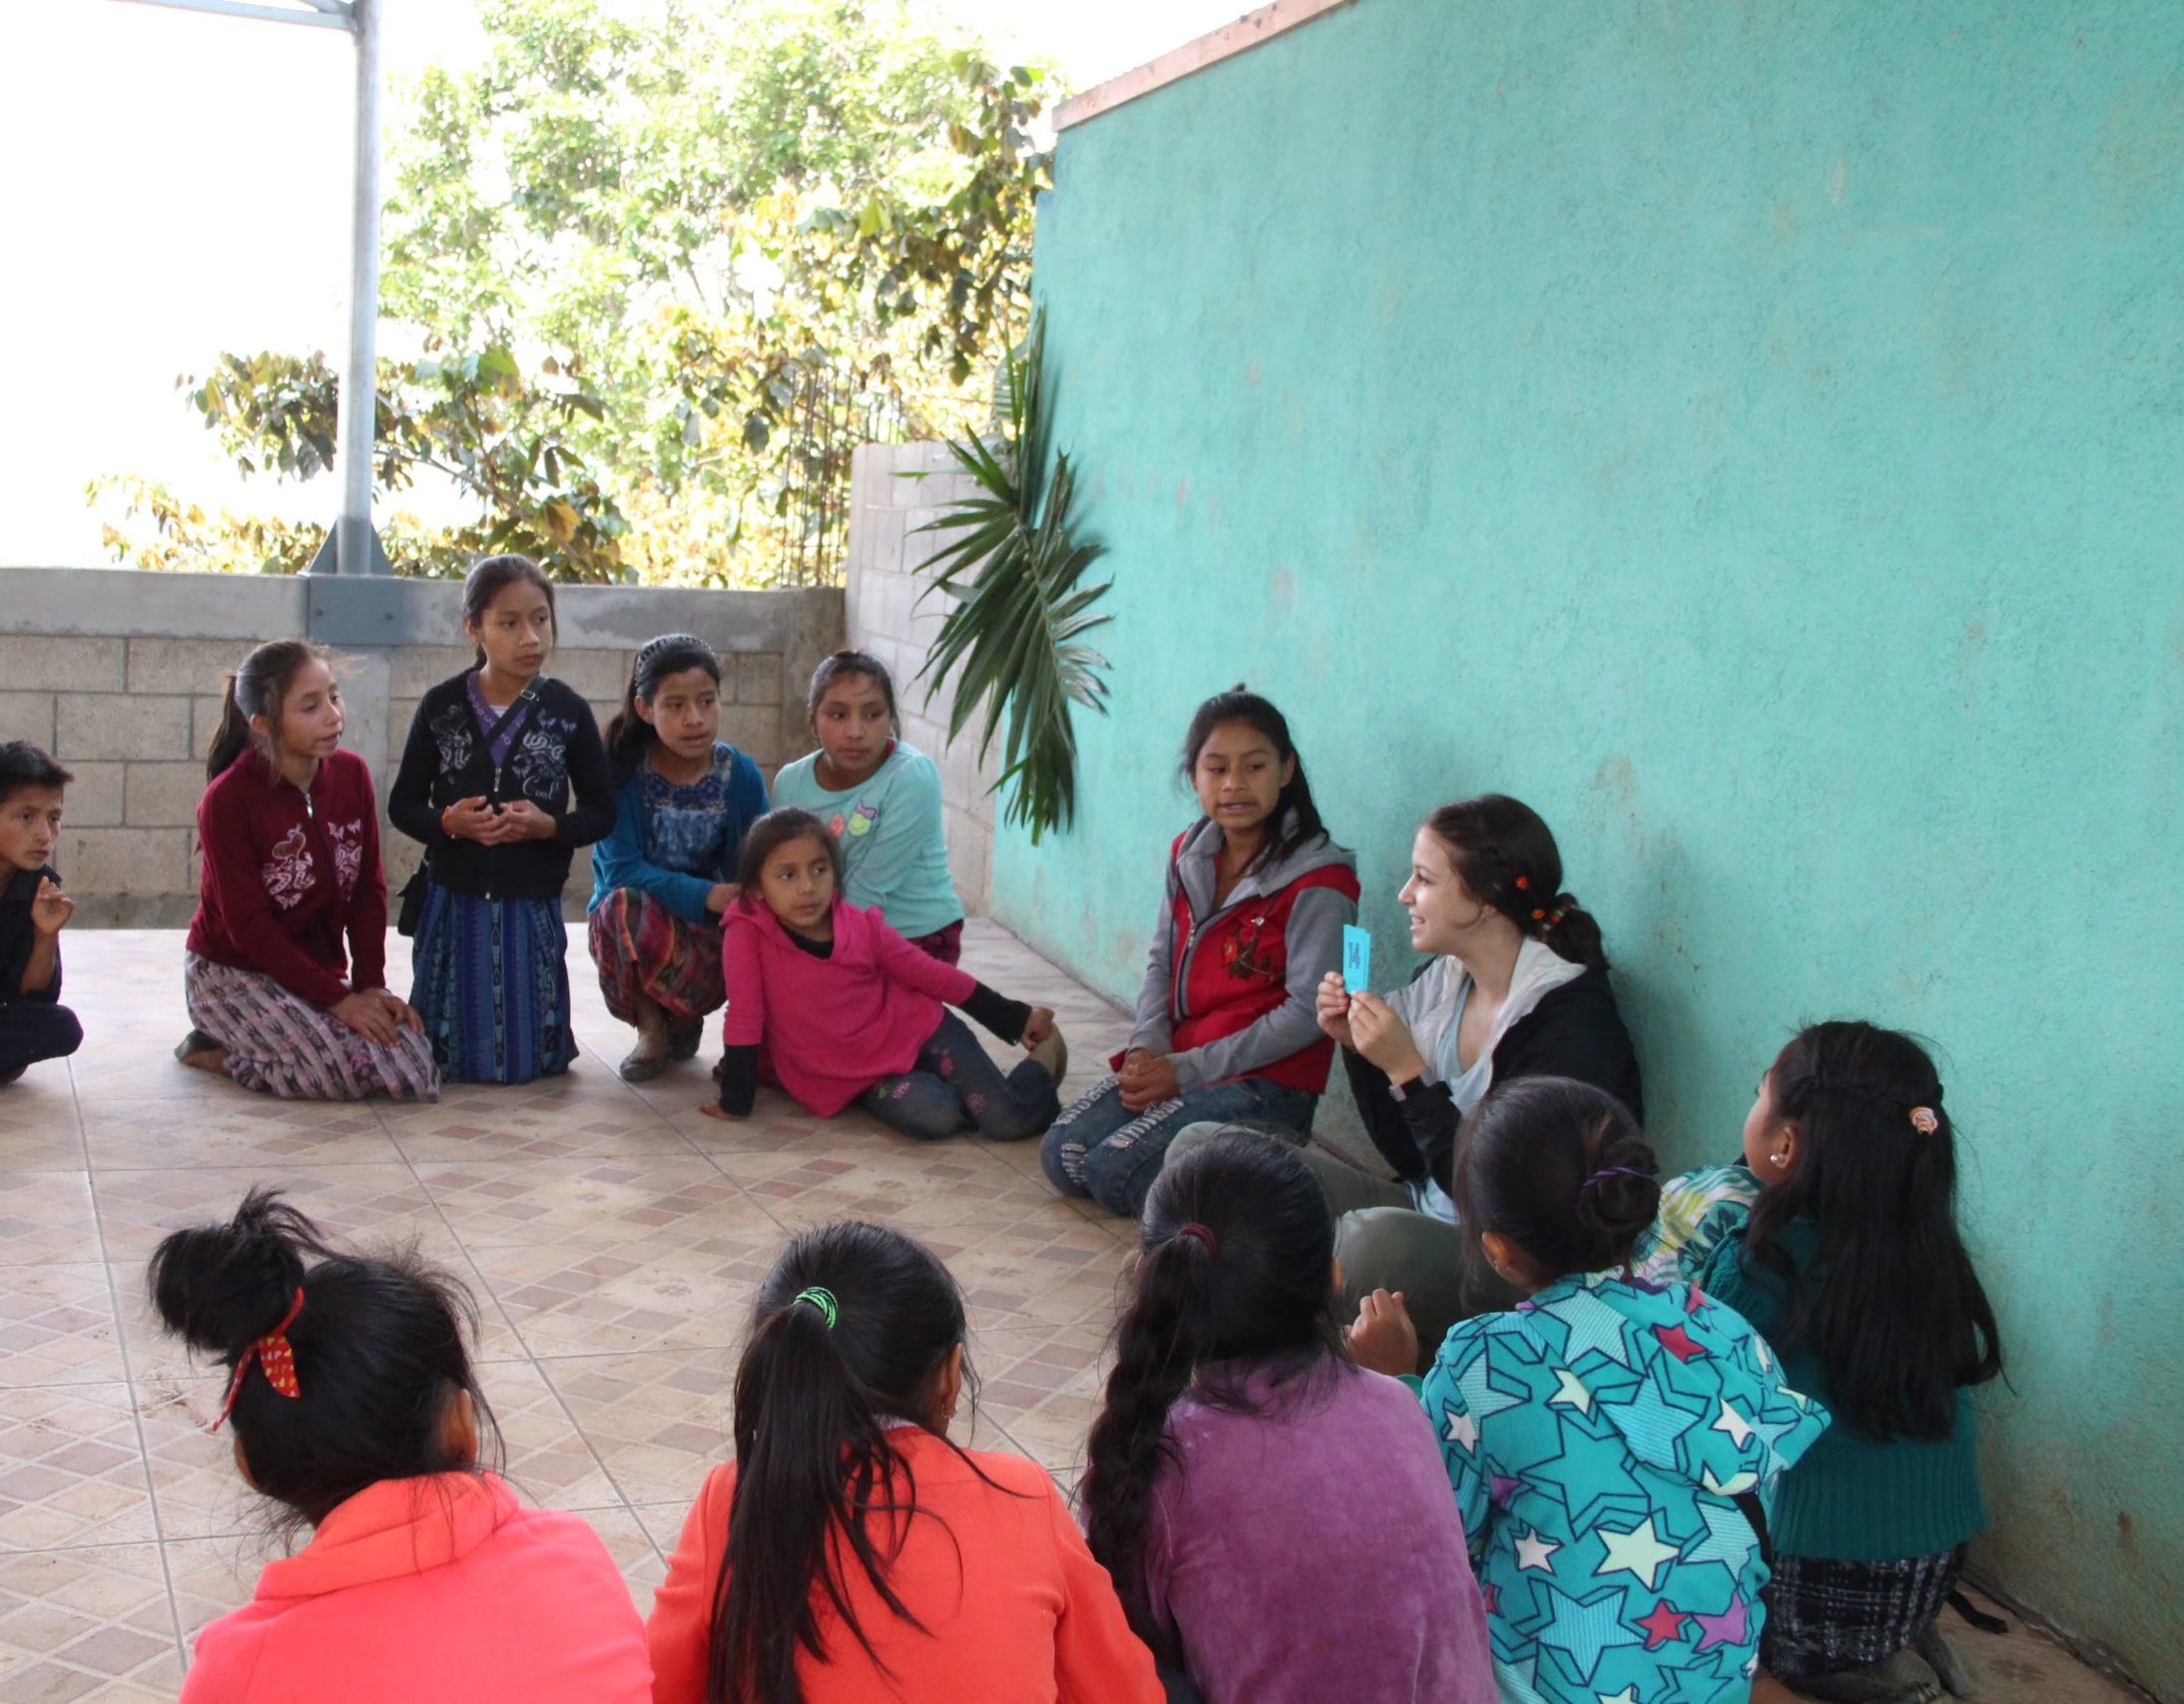 Student teaching kids in Guatemala